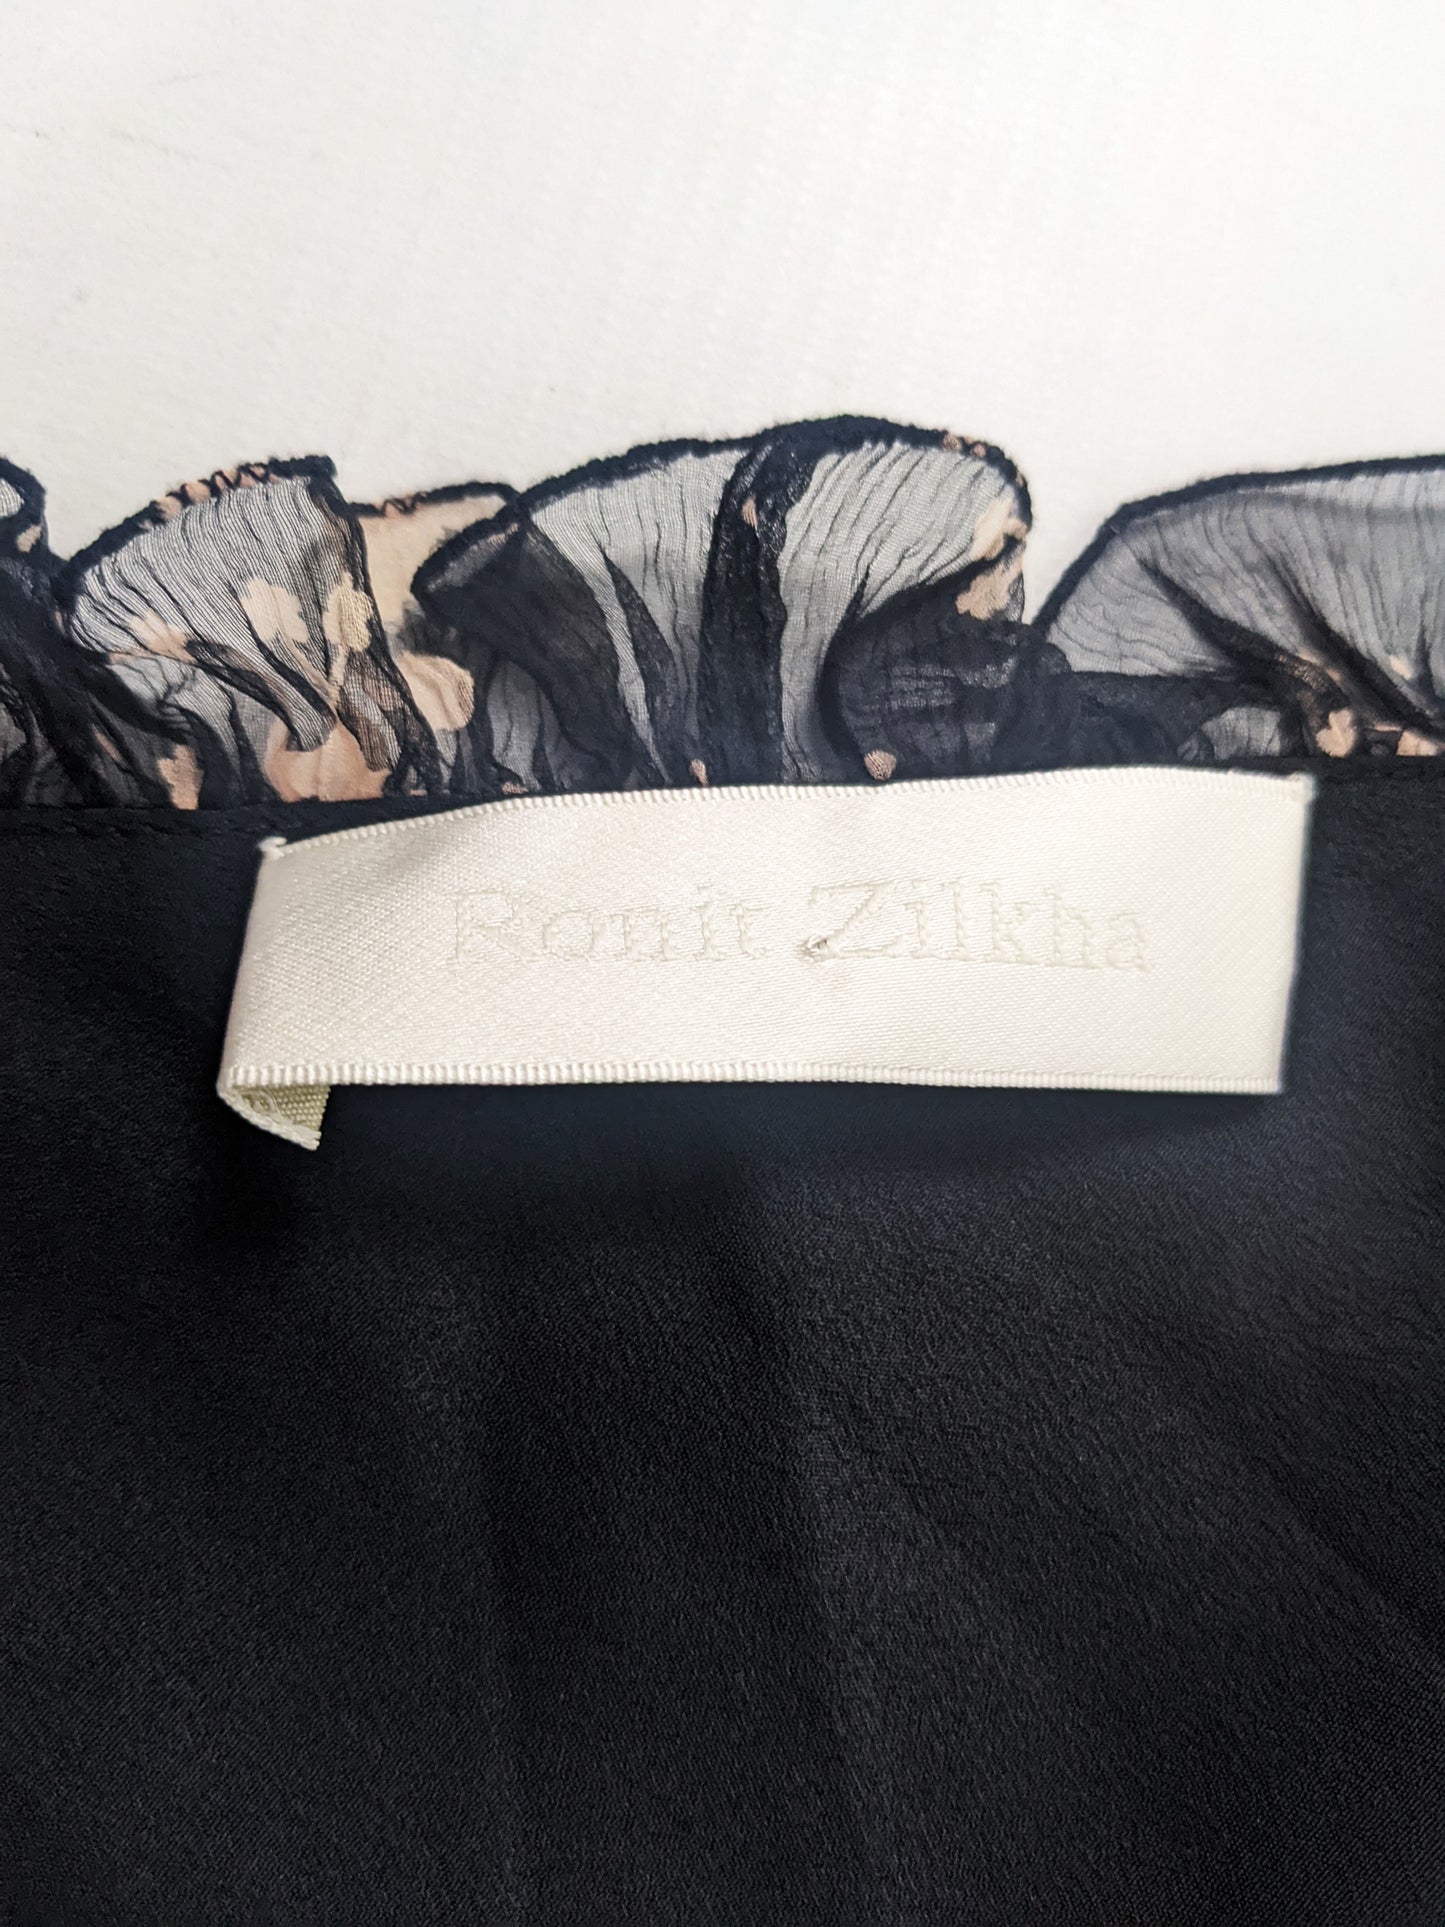 Ronit Zilkha Vintage Poodle Print Silk Chiffon Dress, 2000s